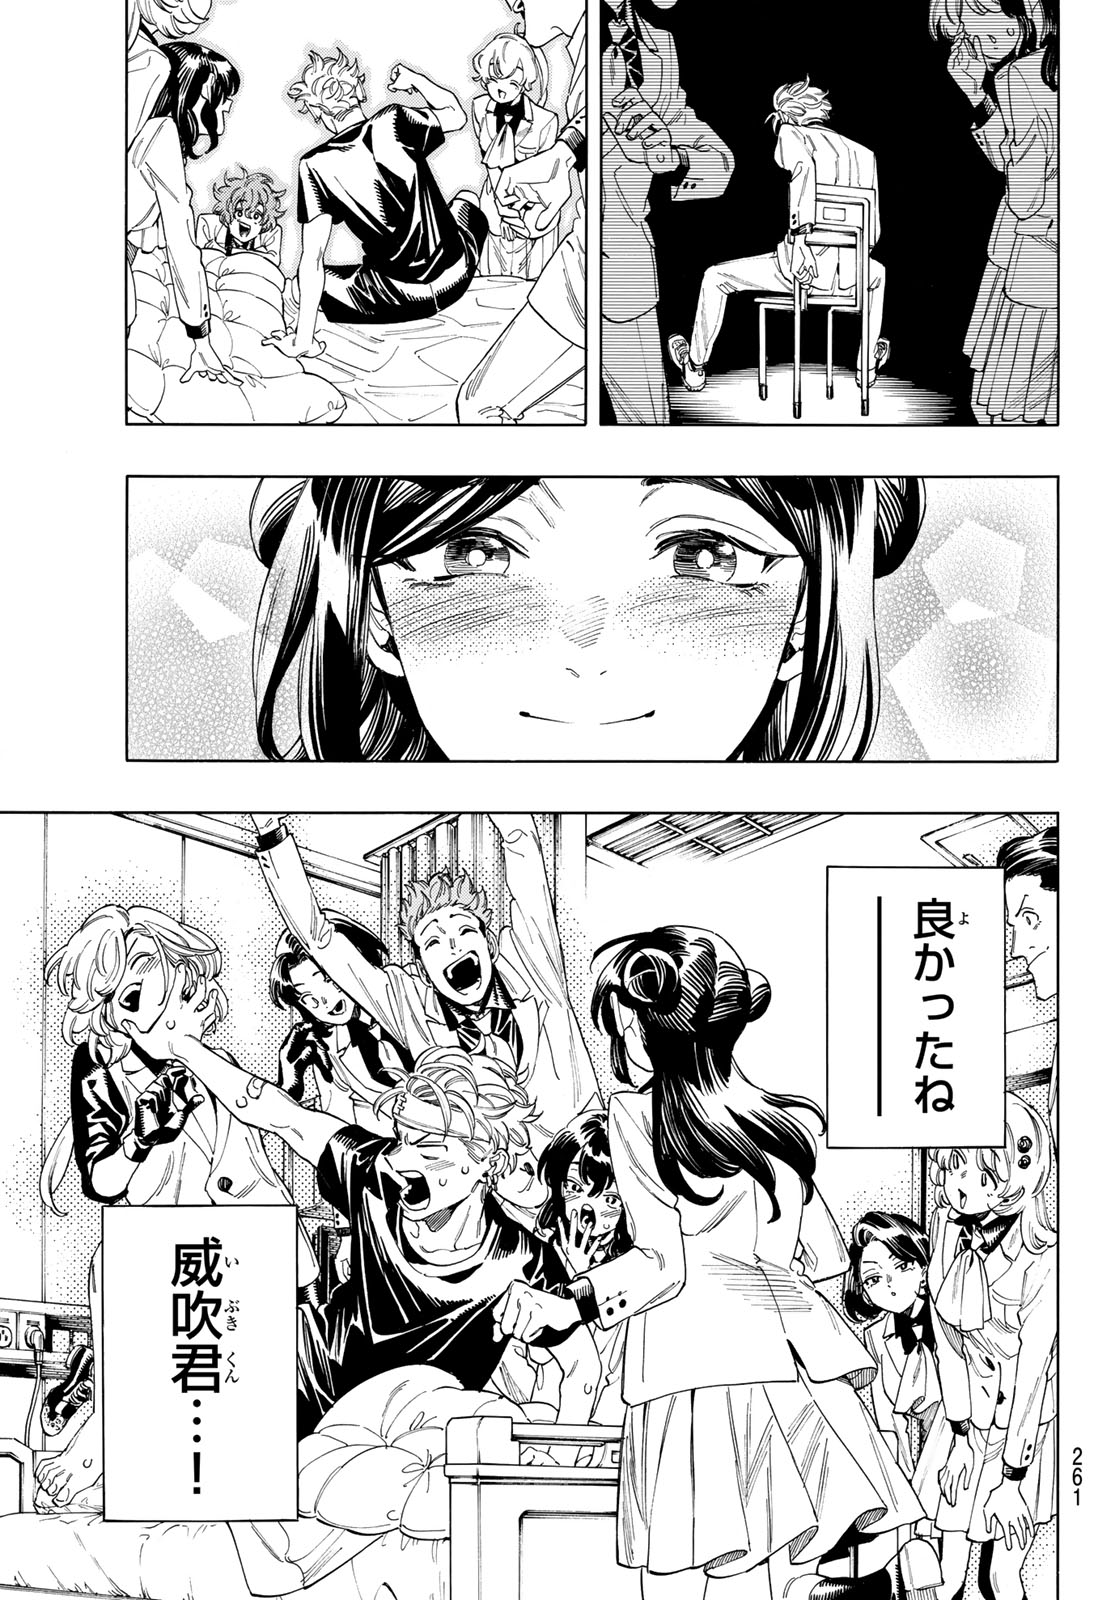 Akabane Honeko no Bodyguard - Chapter 67 - Page 19